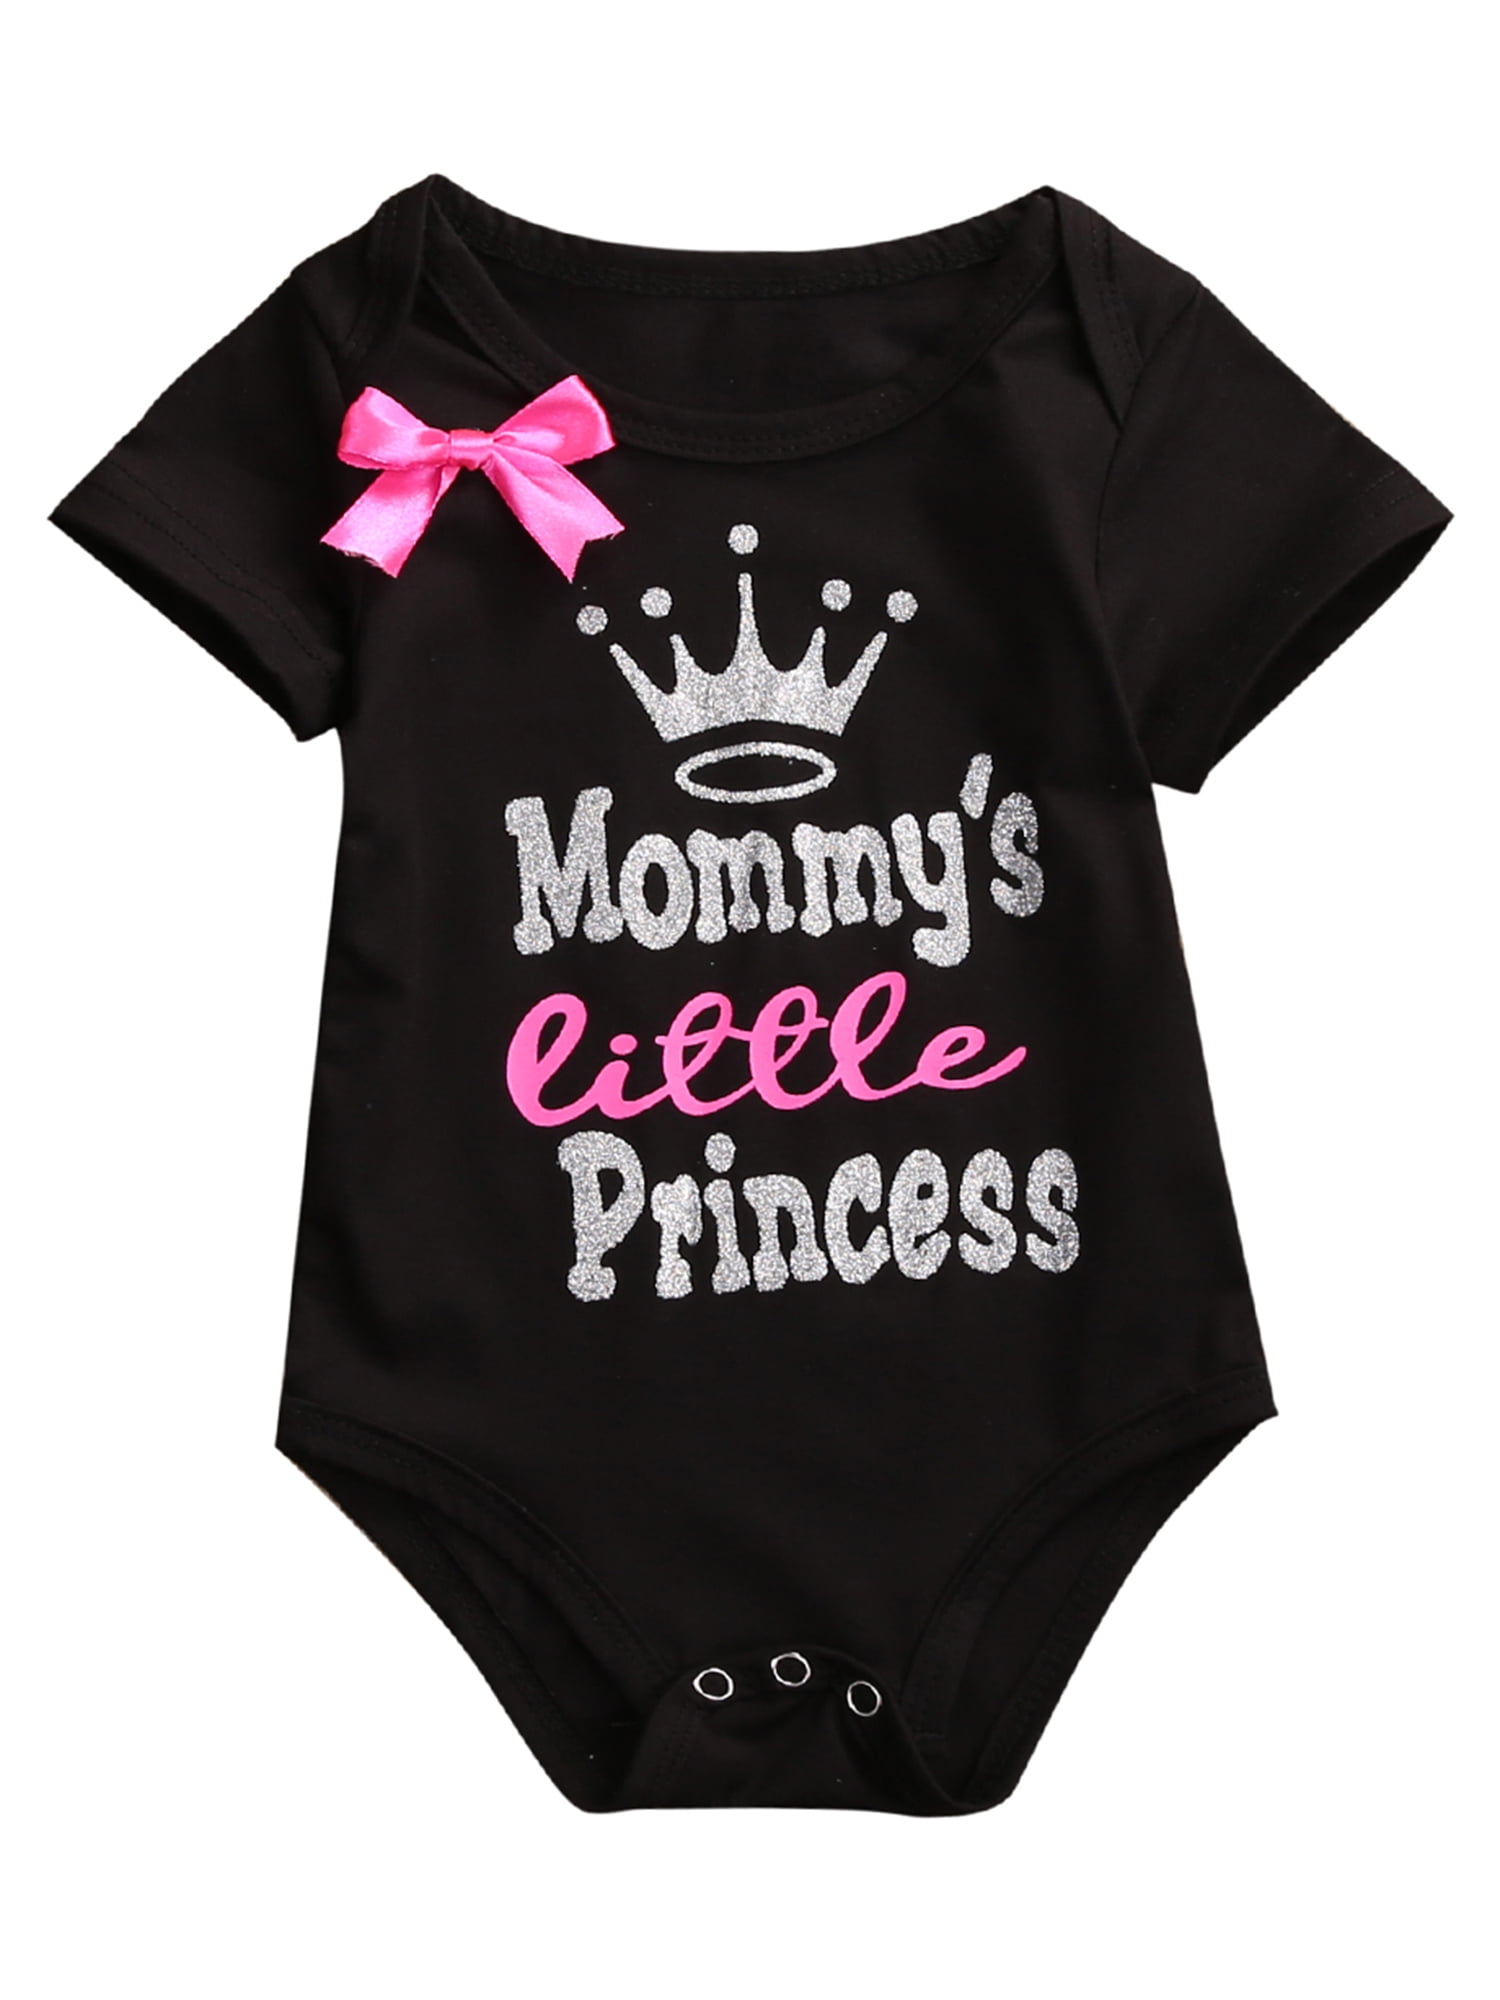 Newborn Toddler Infant Baby Girl Romper Jumpsuit Bodysuit Outfit Sunsuit Clothes